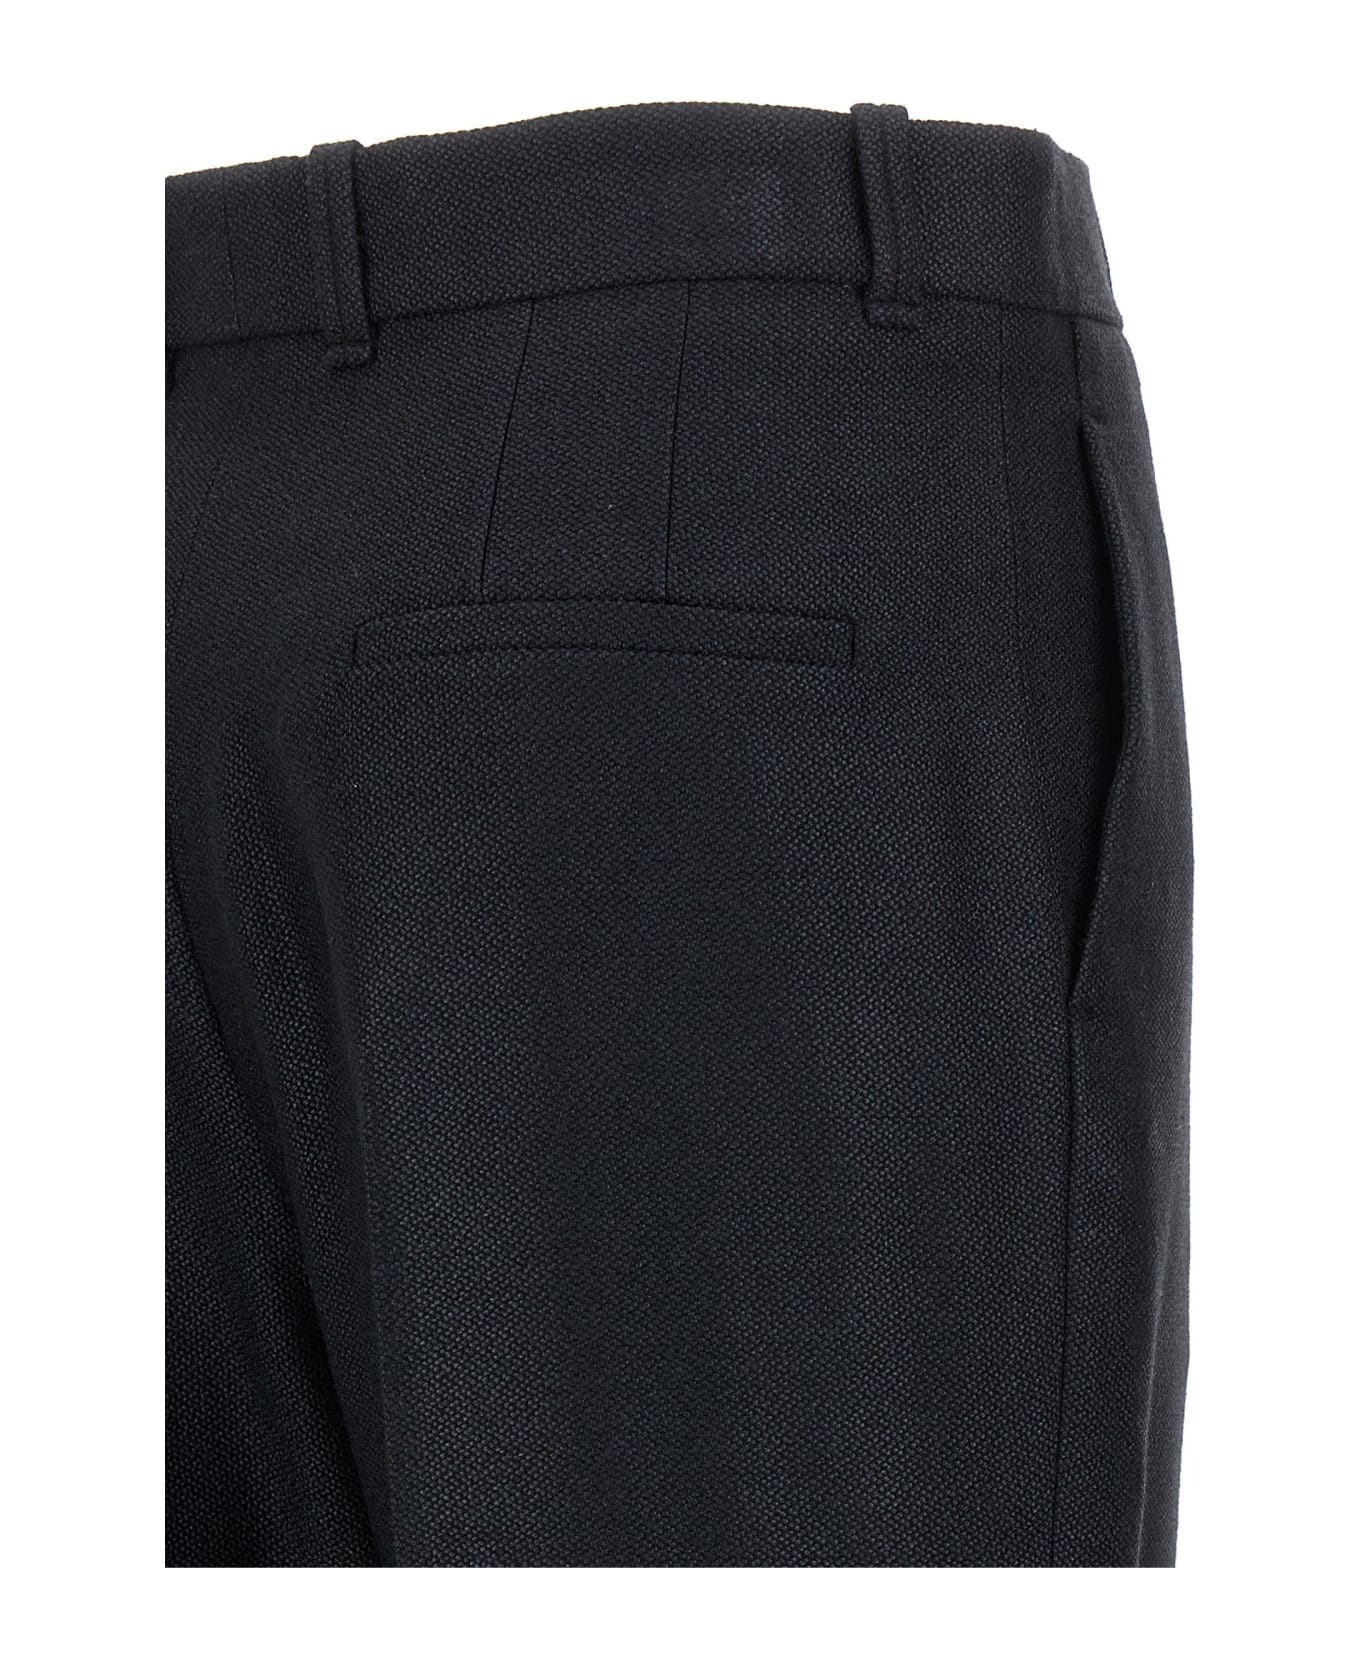 Chloé High-waisted Flare Trousers - BLACK